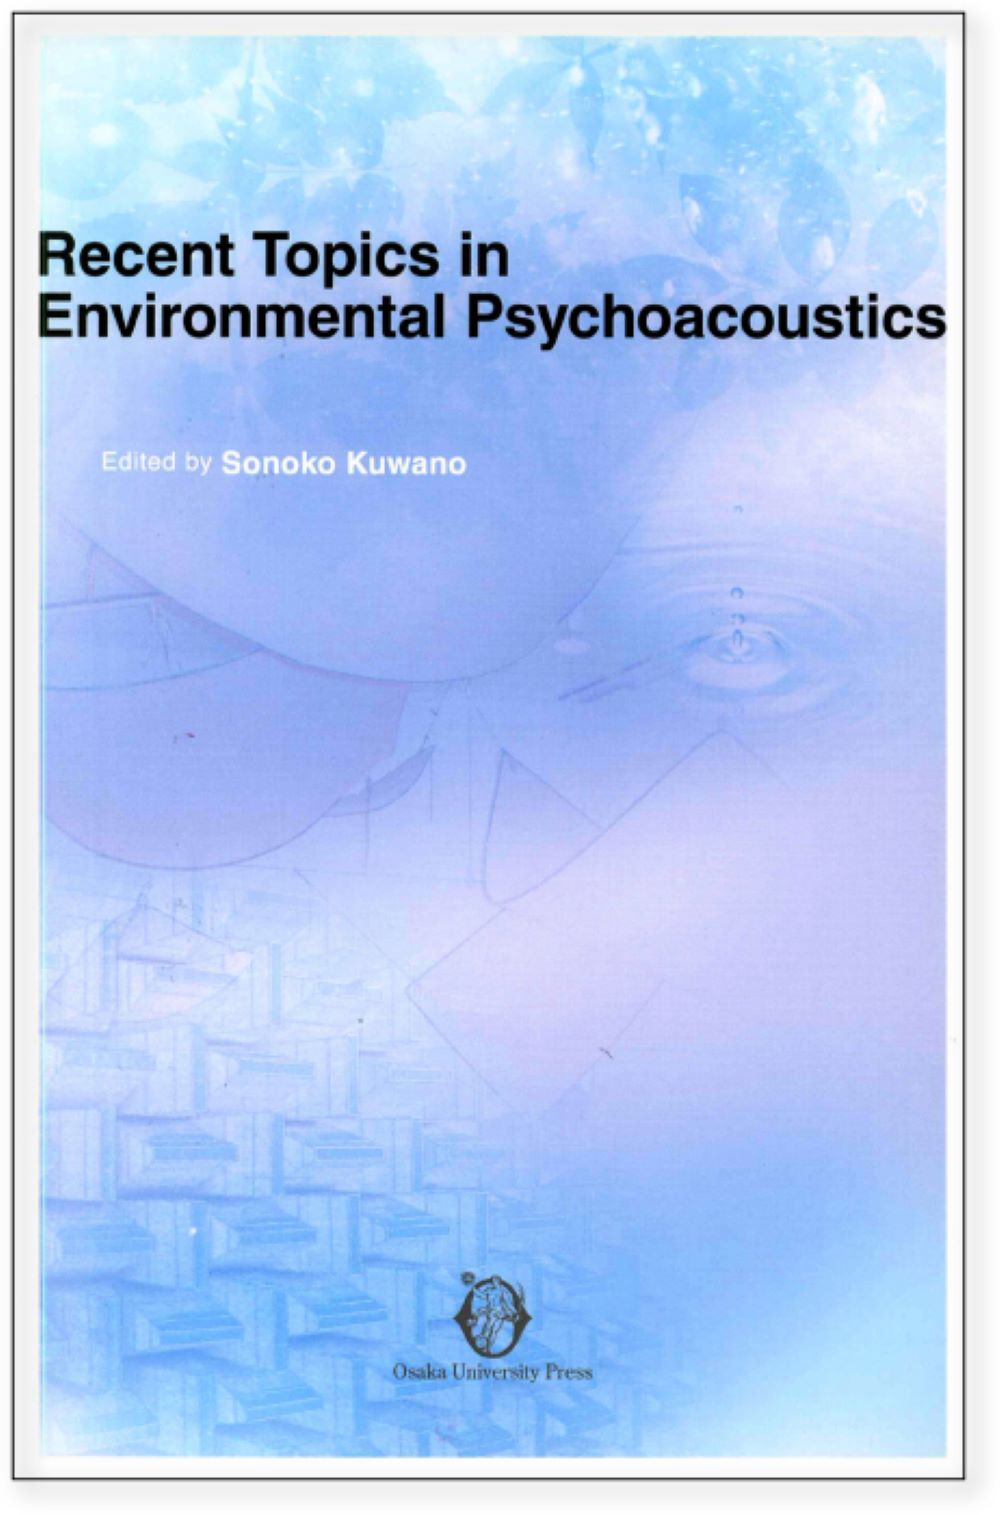 Recent Topics in Environmental Psychoacousticsの商品画像